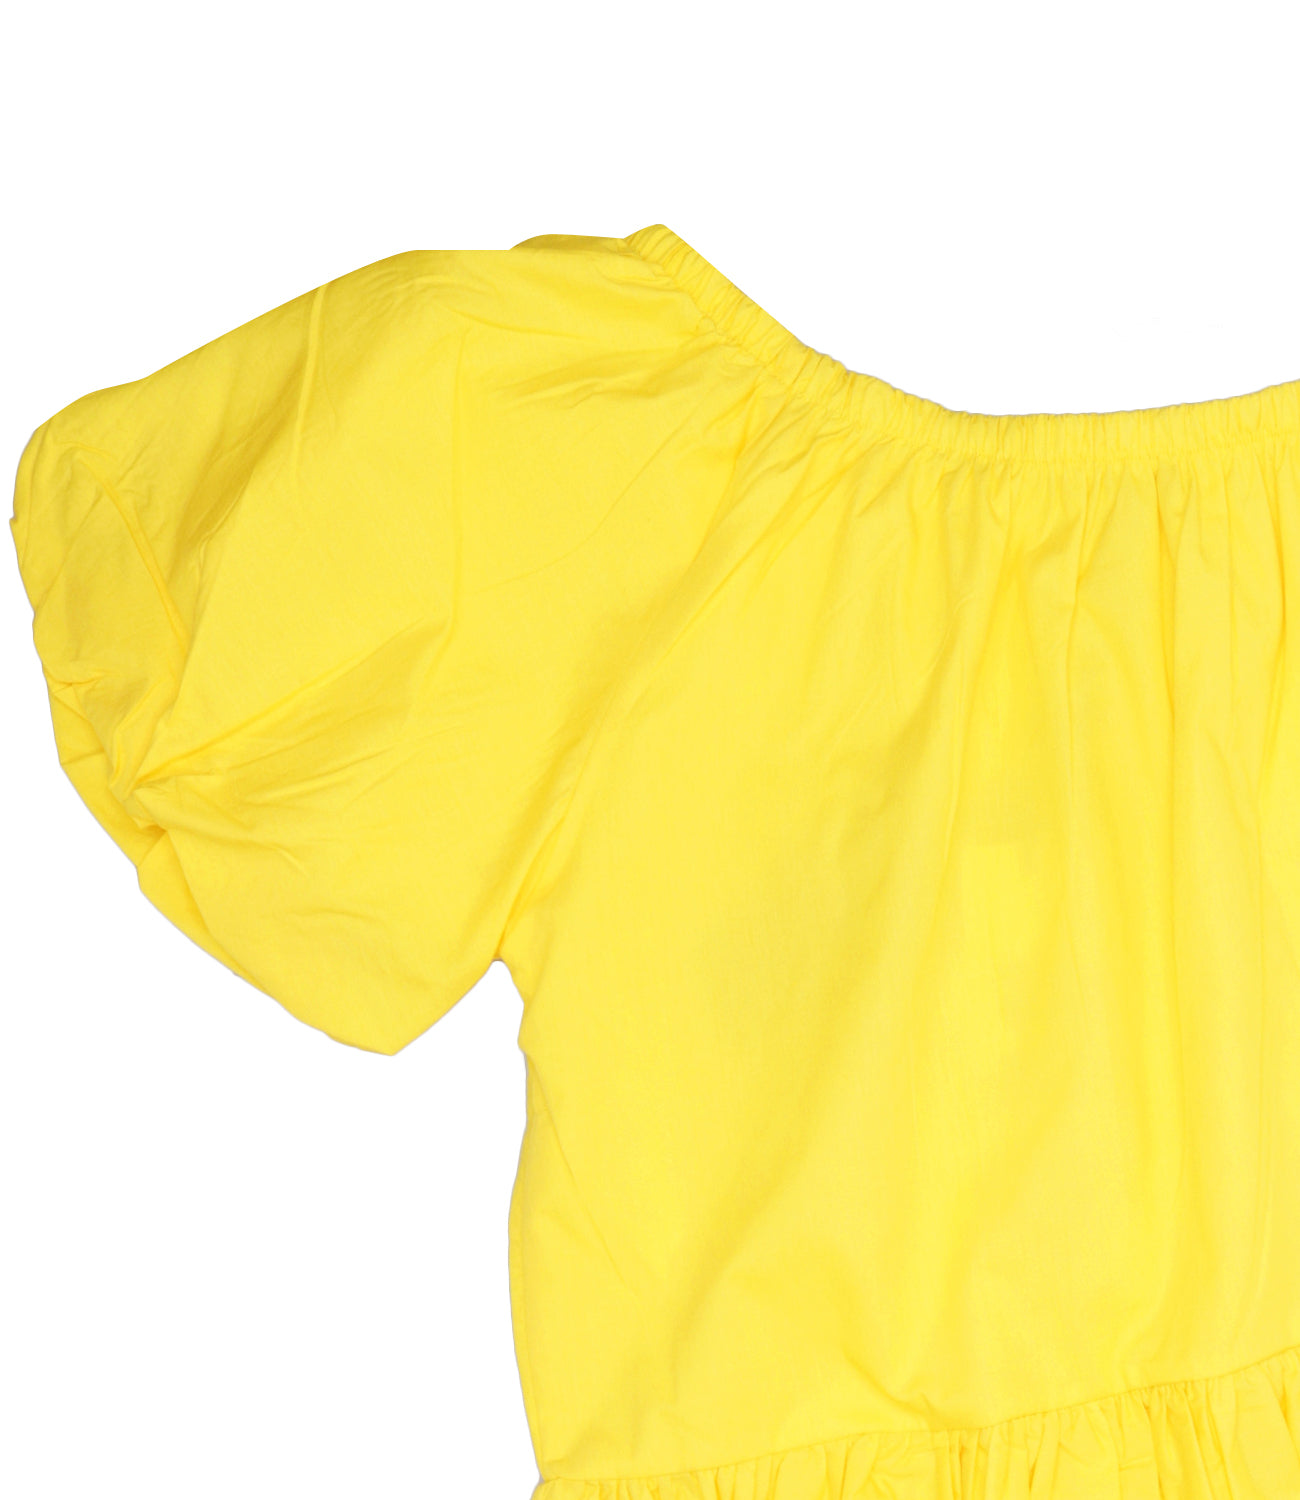 Pier | Yellow Dress